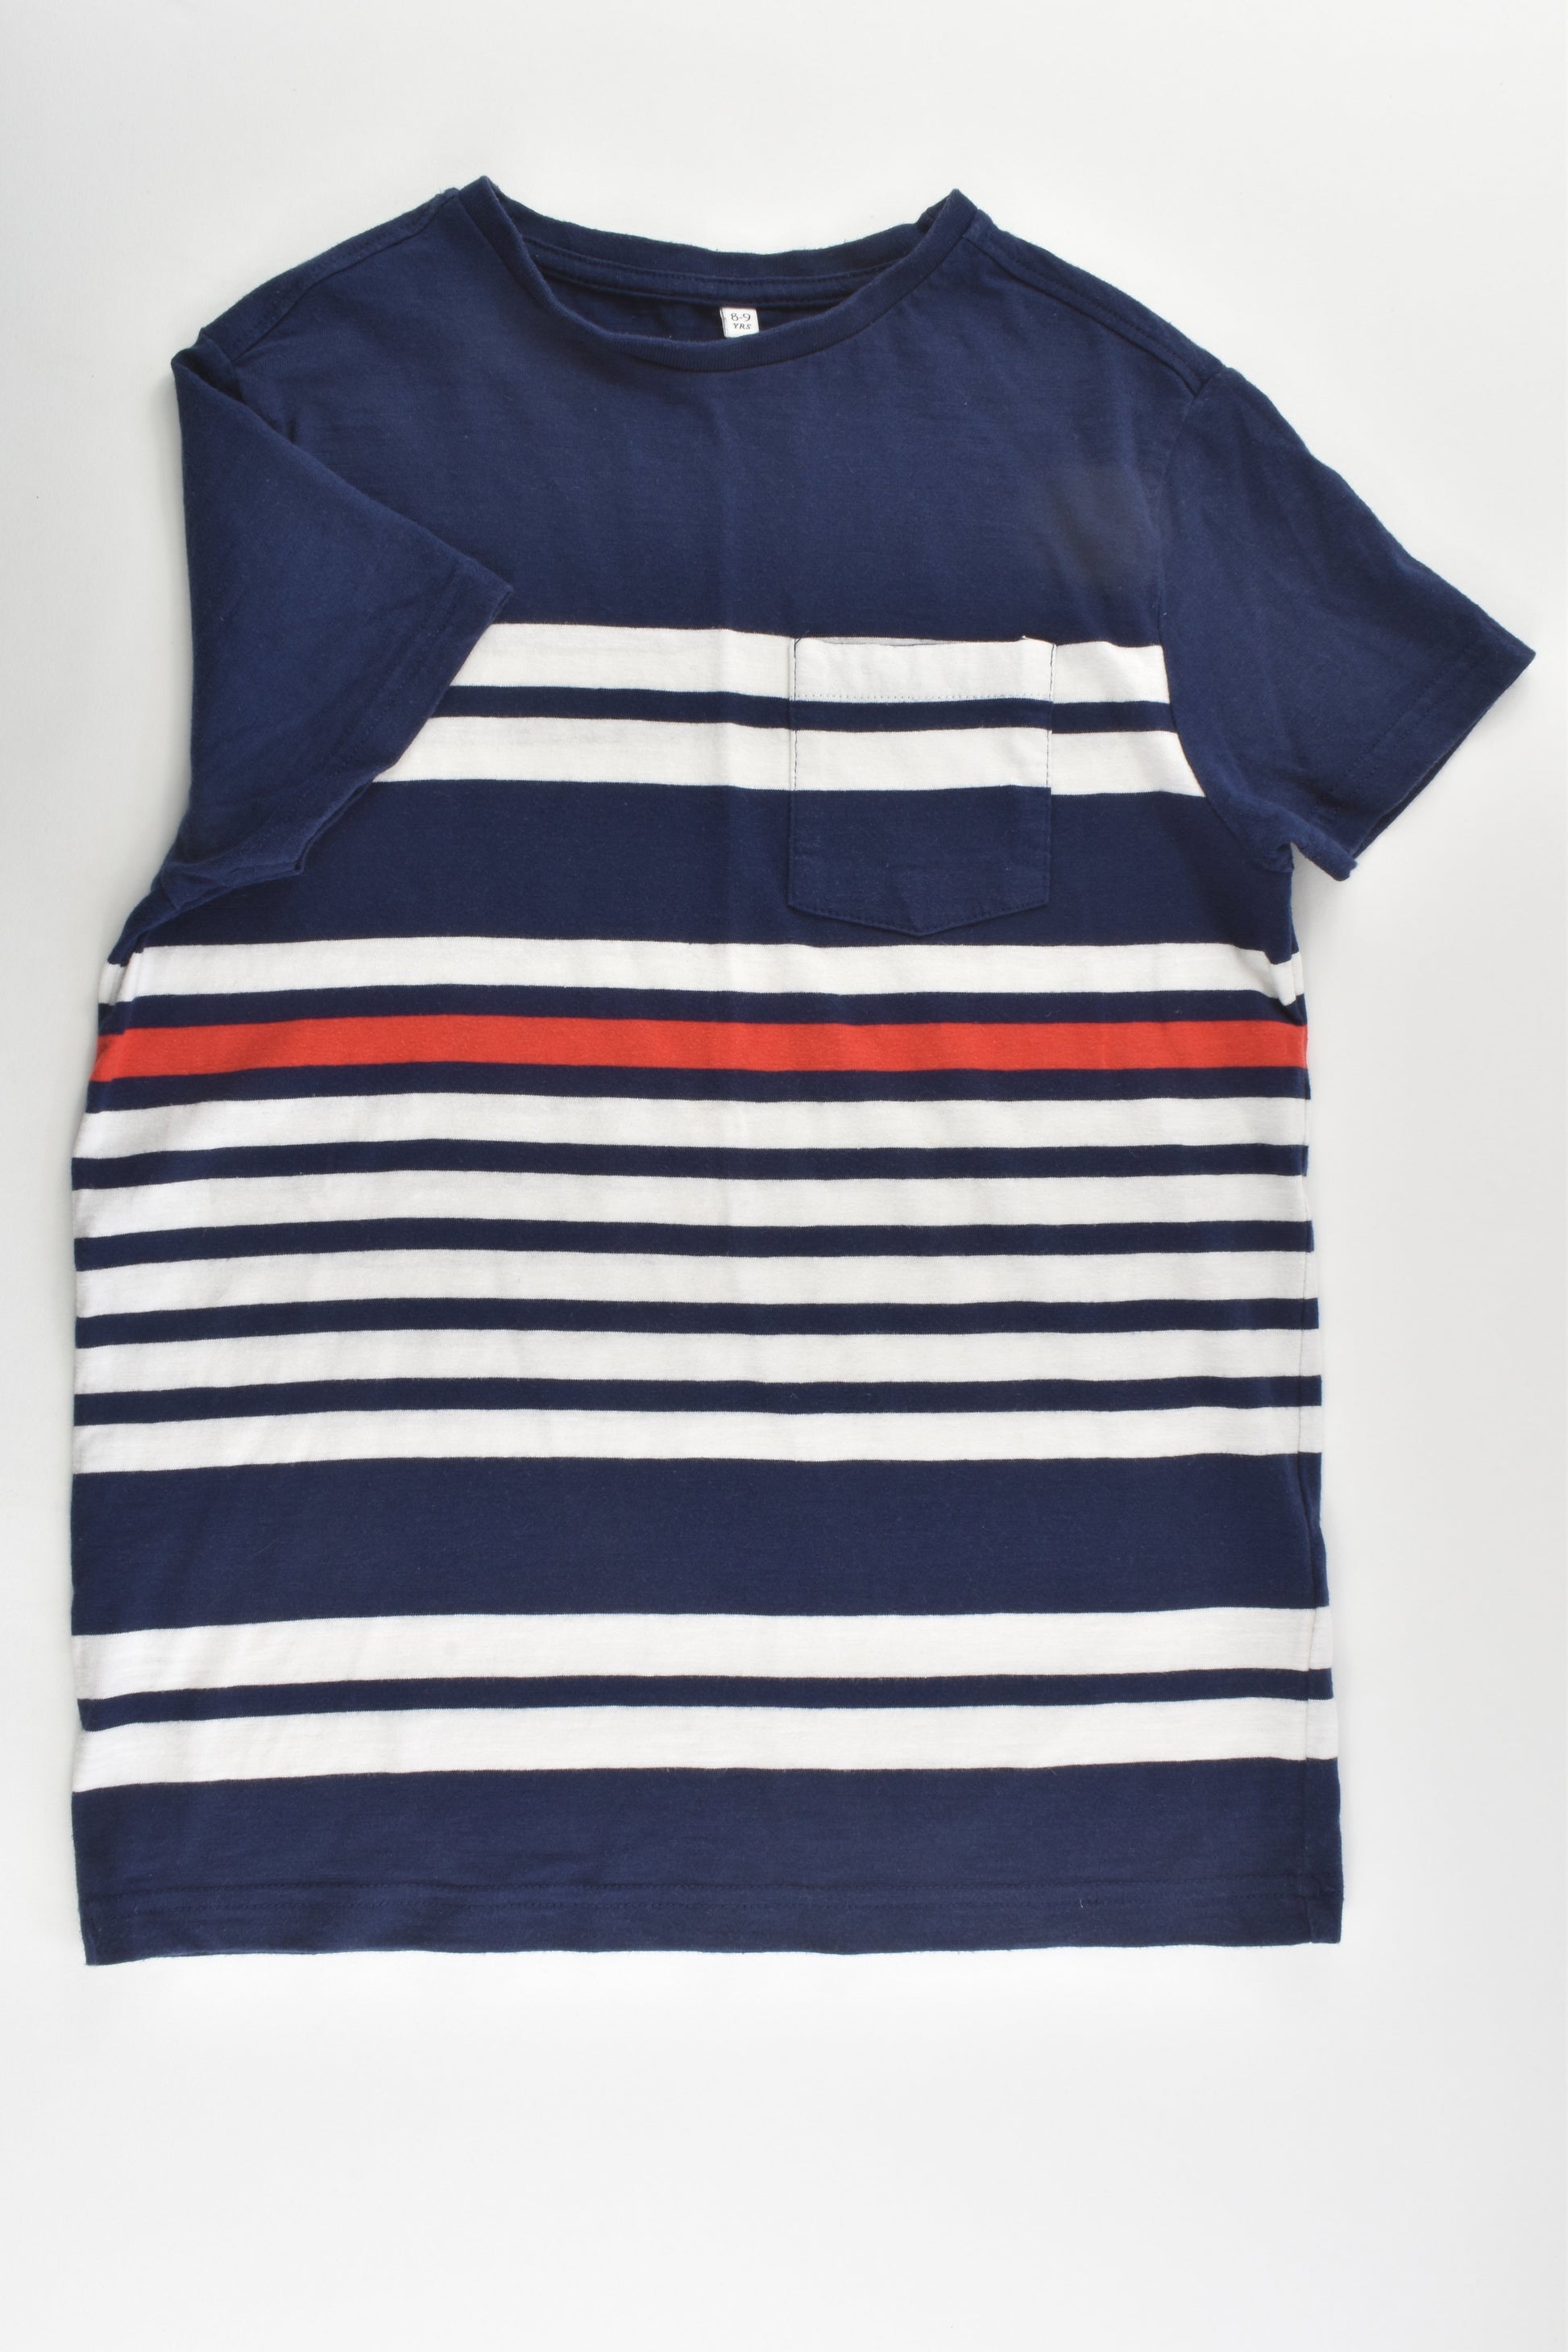 Marks & Spencer Size 8-9 Striped T-shirt